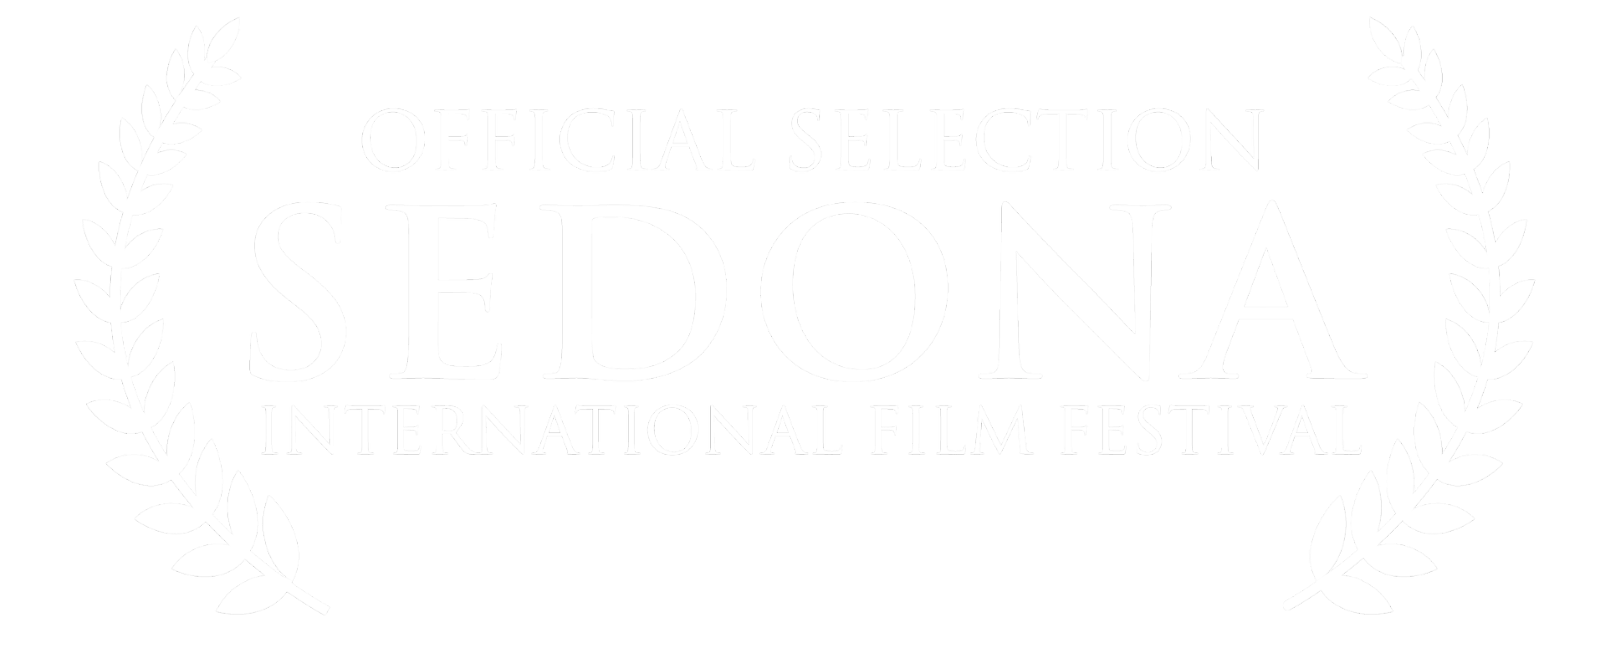  Sedona International Film Festival 